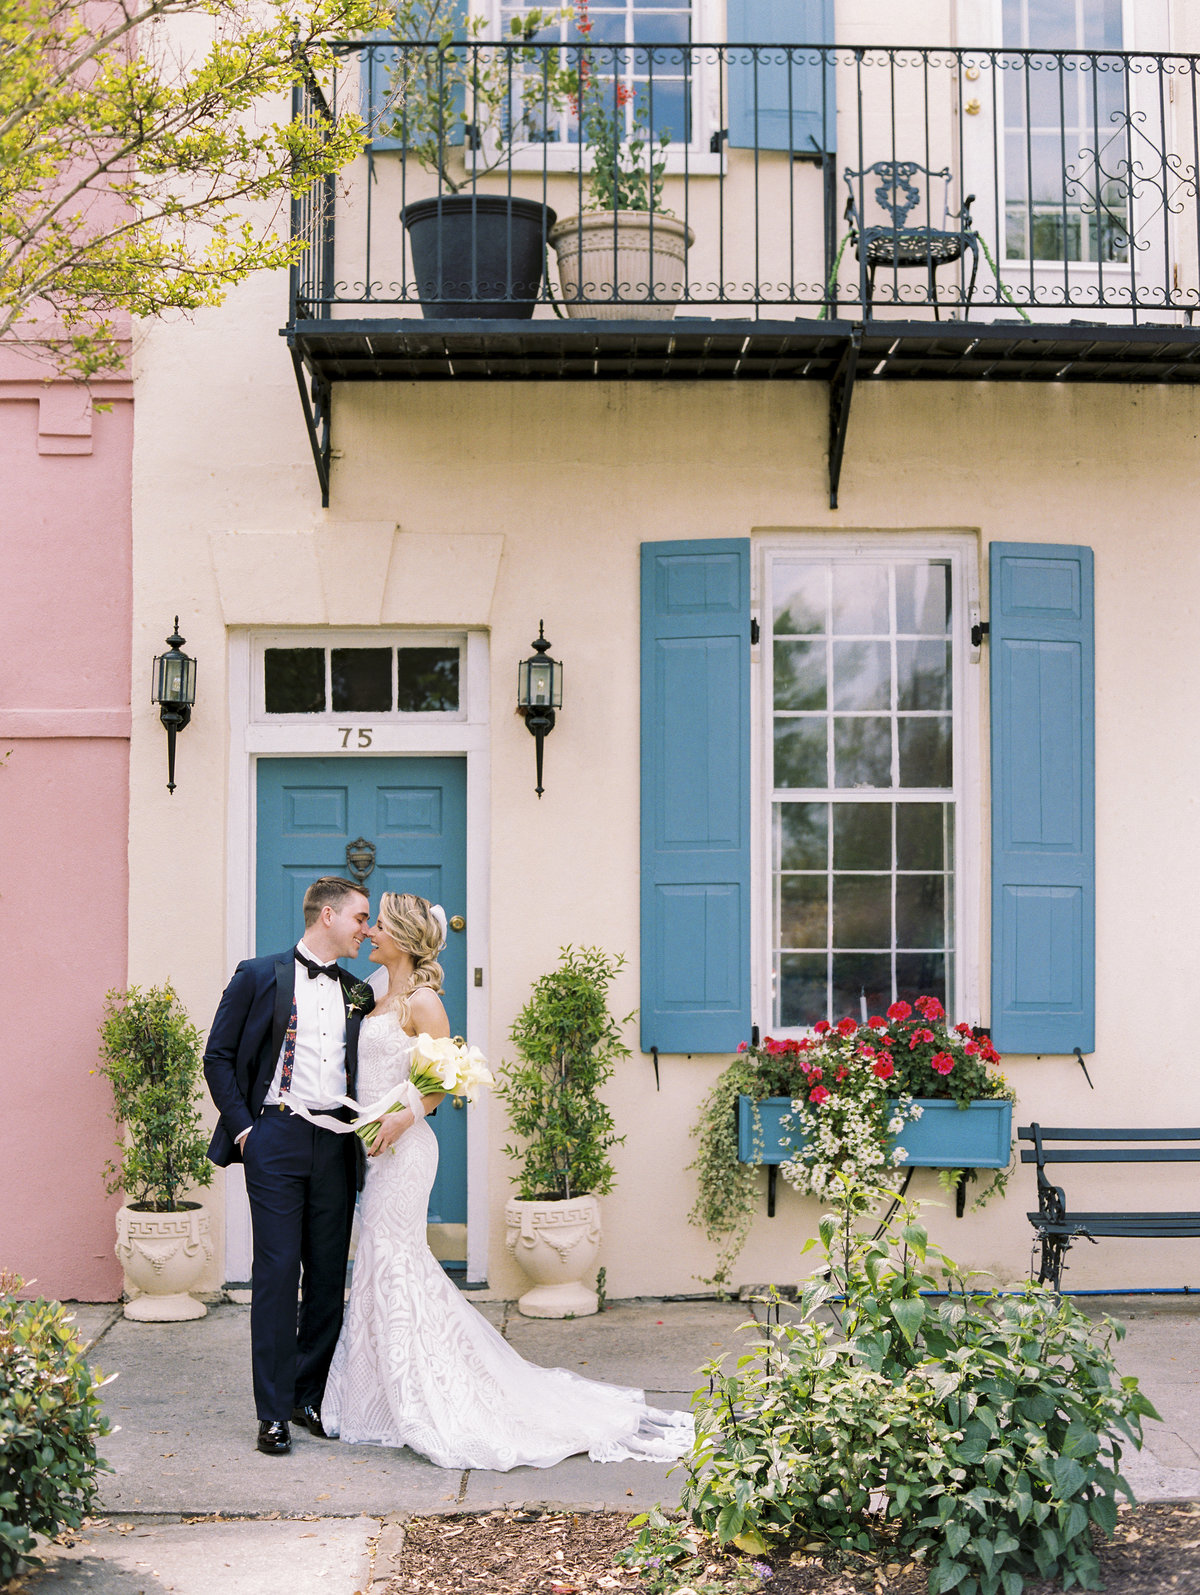 Gorgeous Rainbow Row wedding pictures in Charleston.